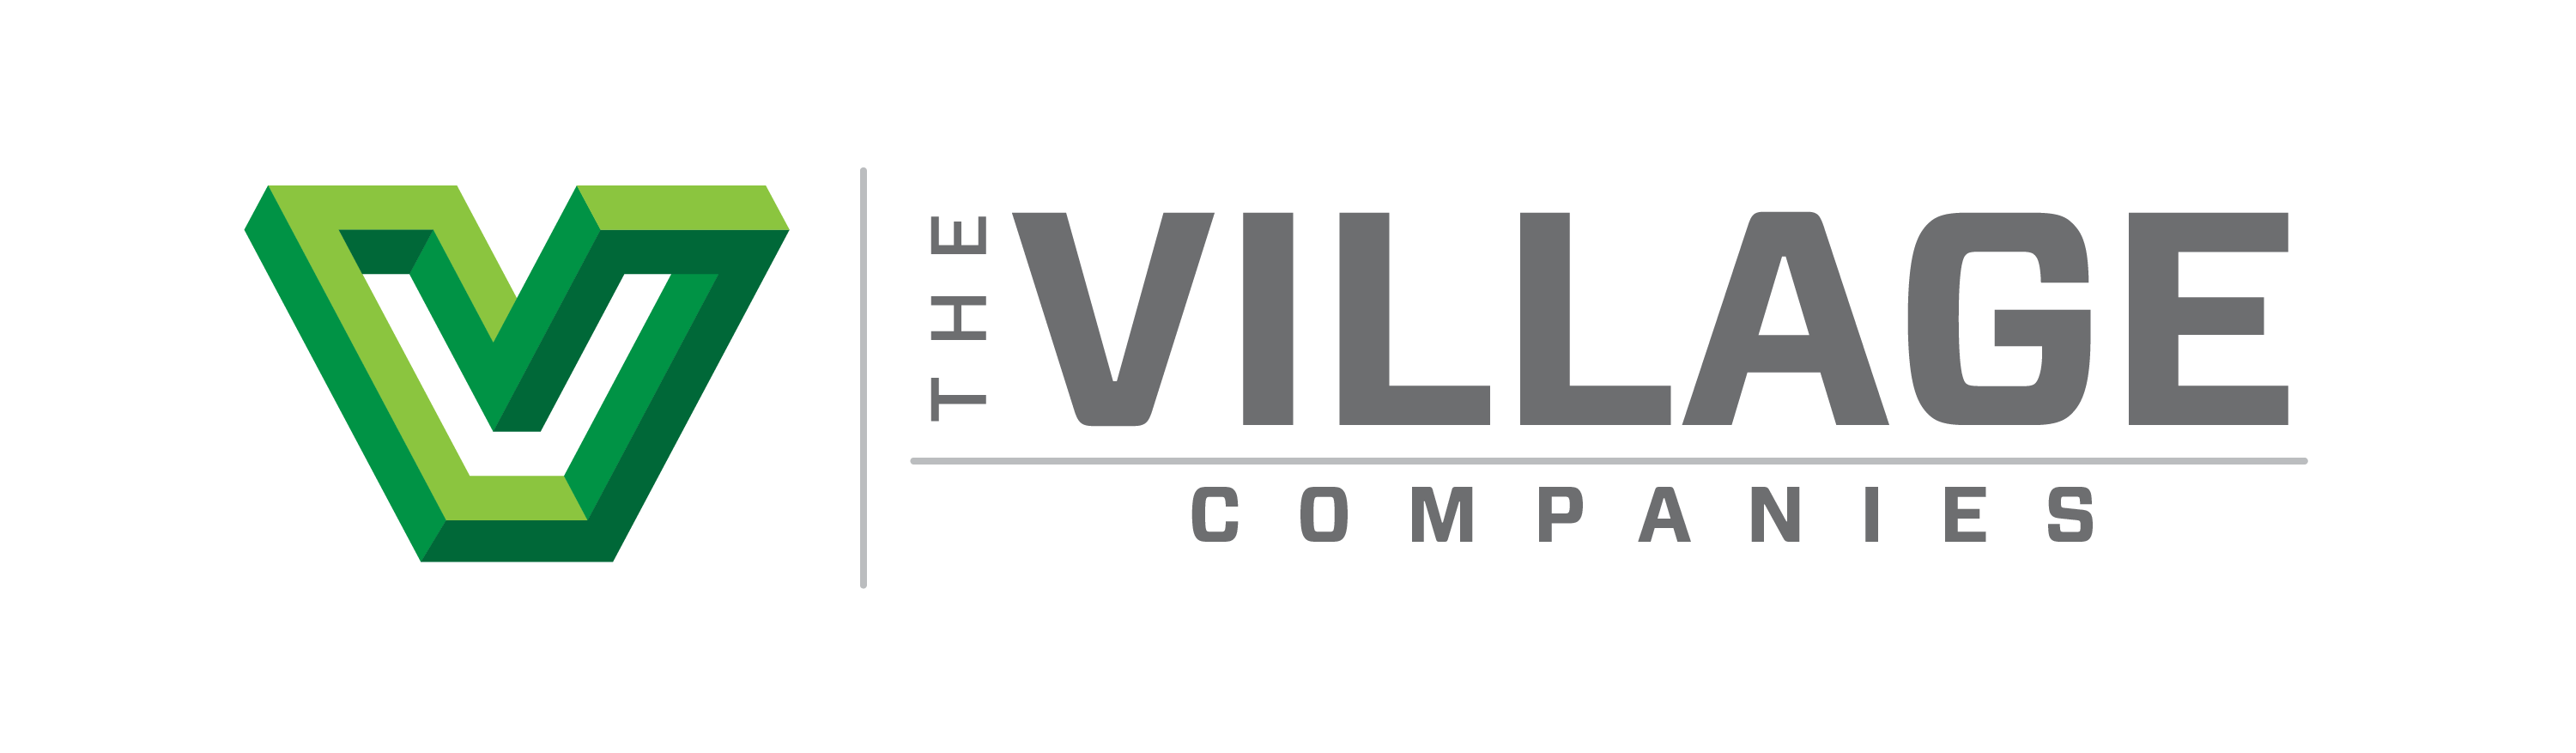 The Village Companies